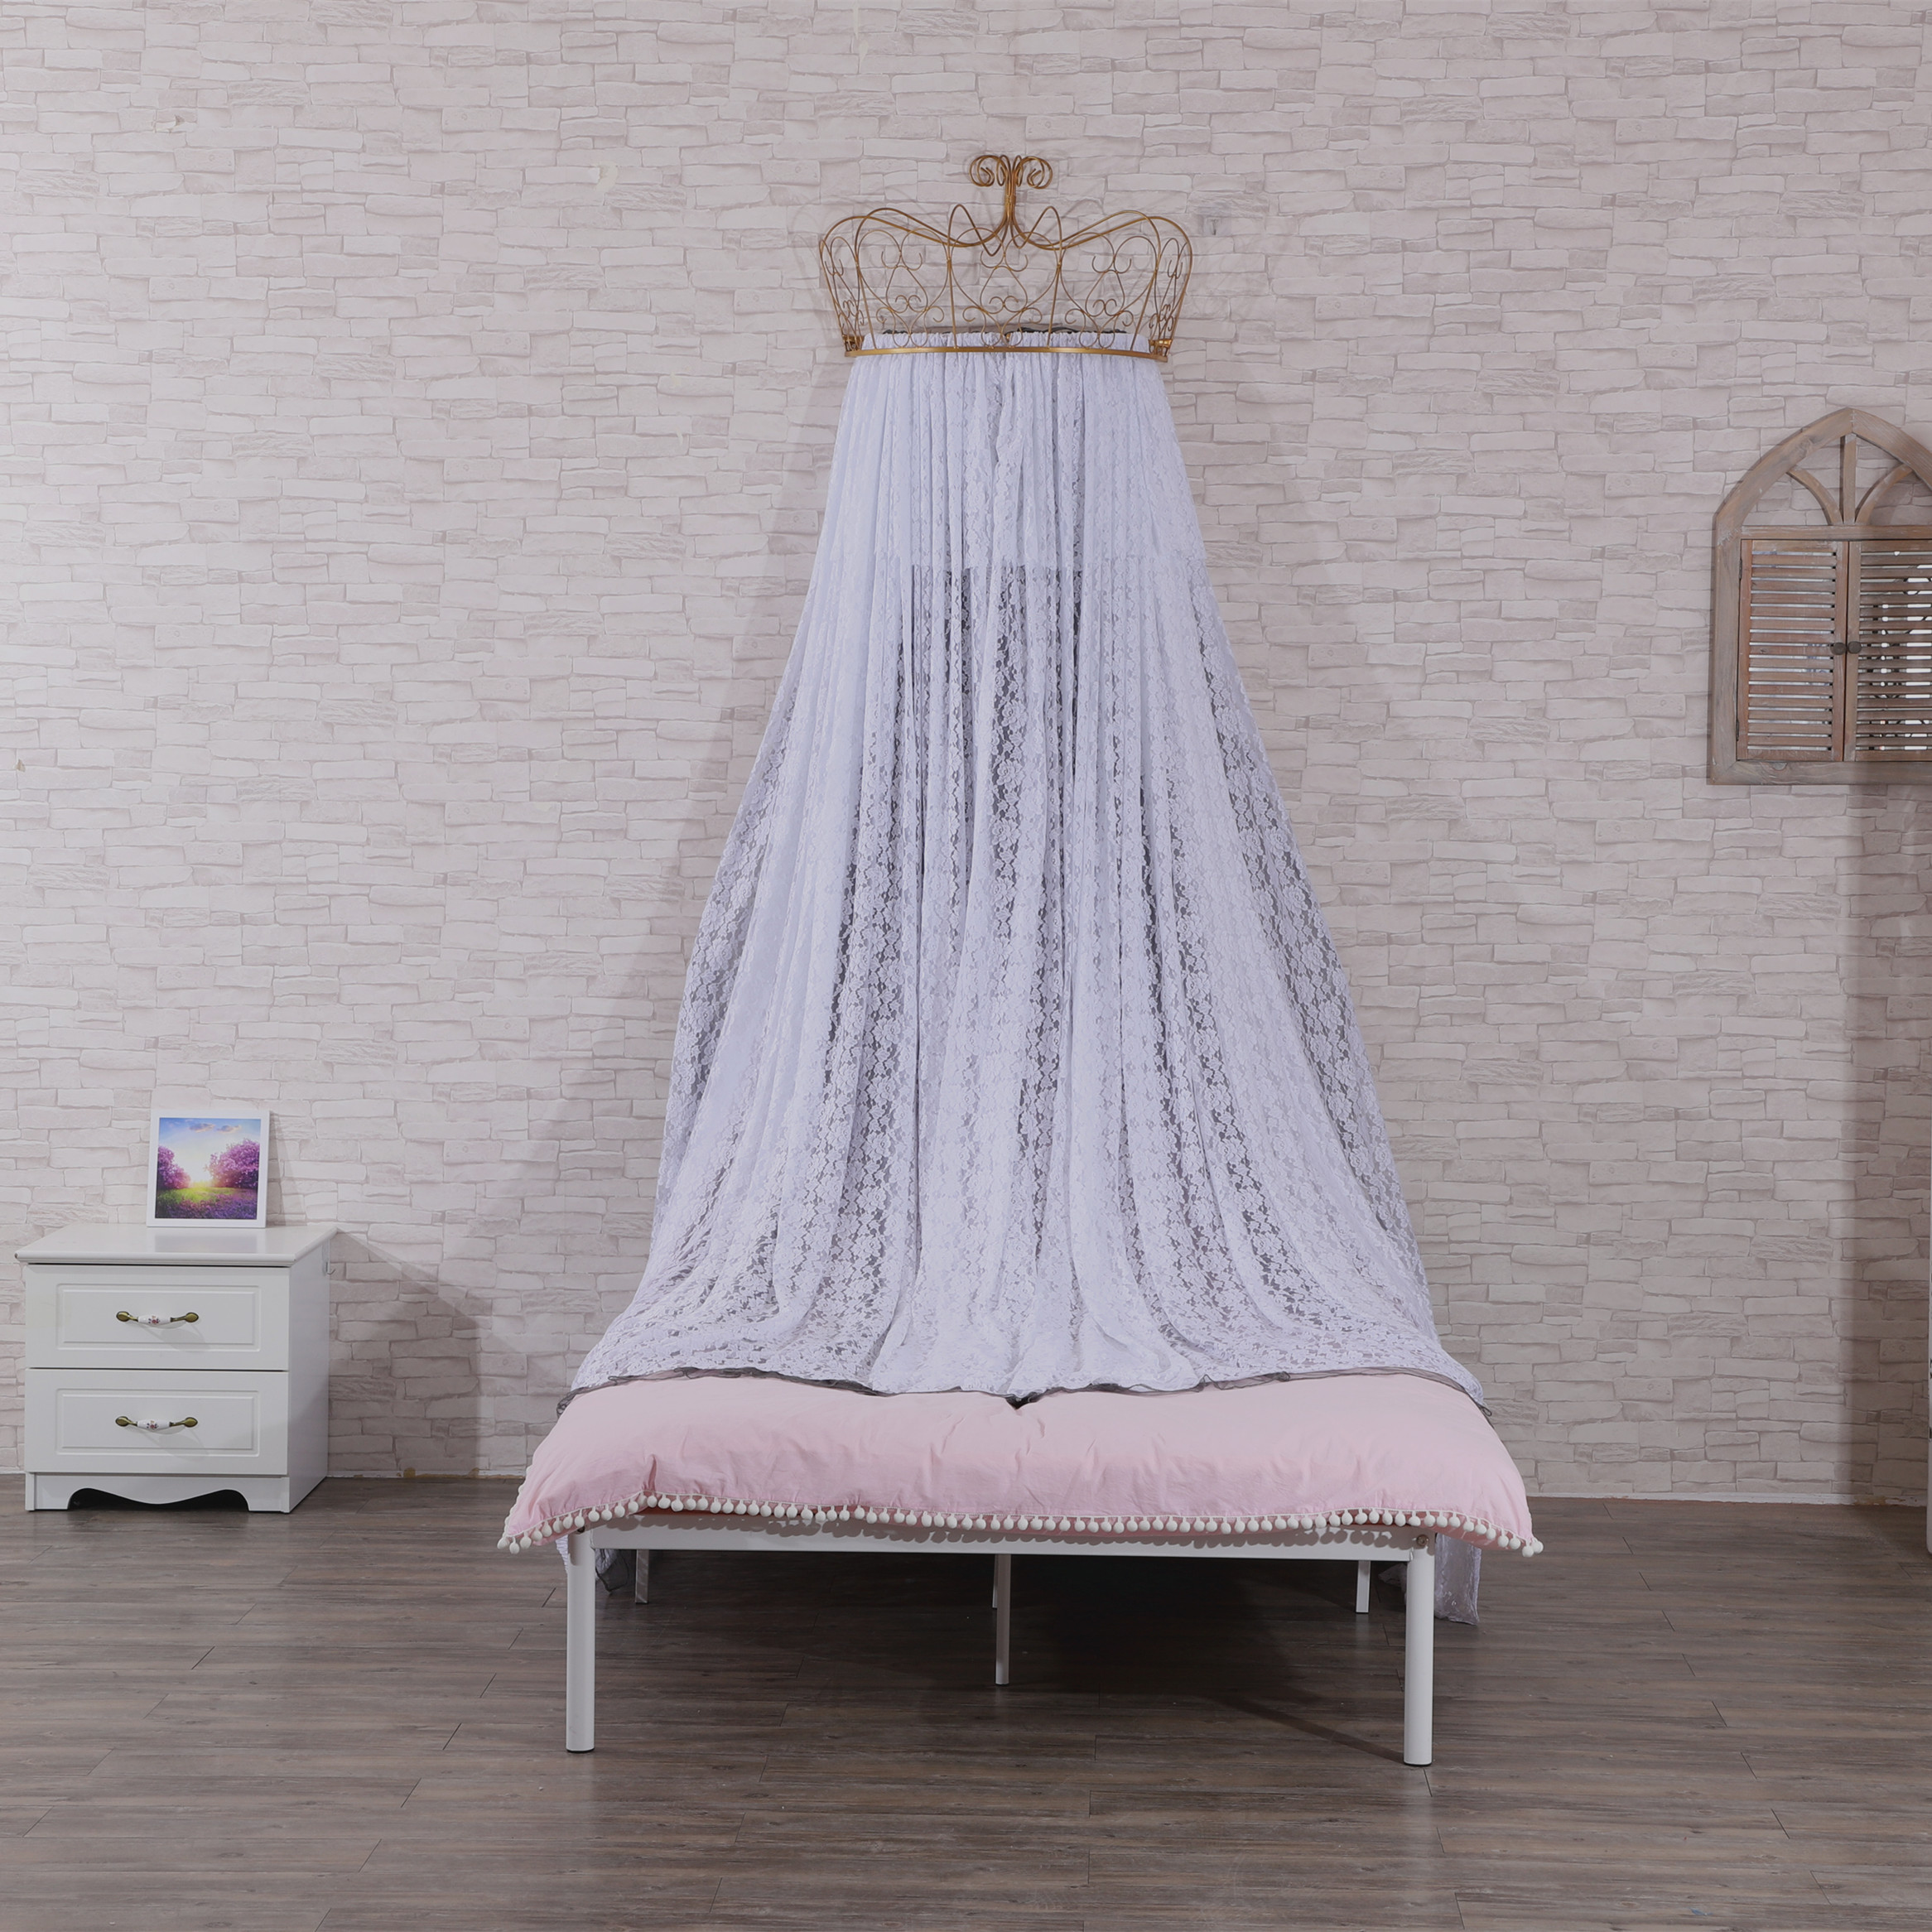 Dosel de cama decorativo de encaje con corona de princesa